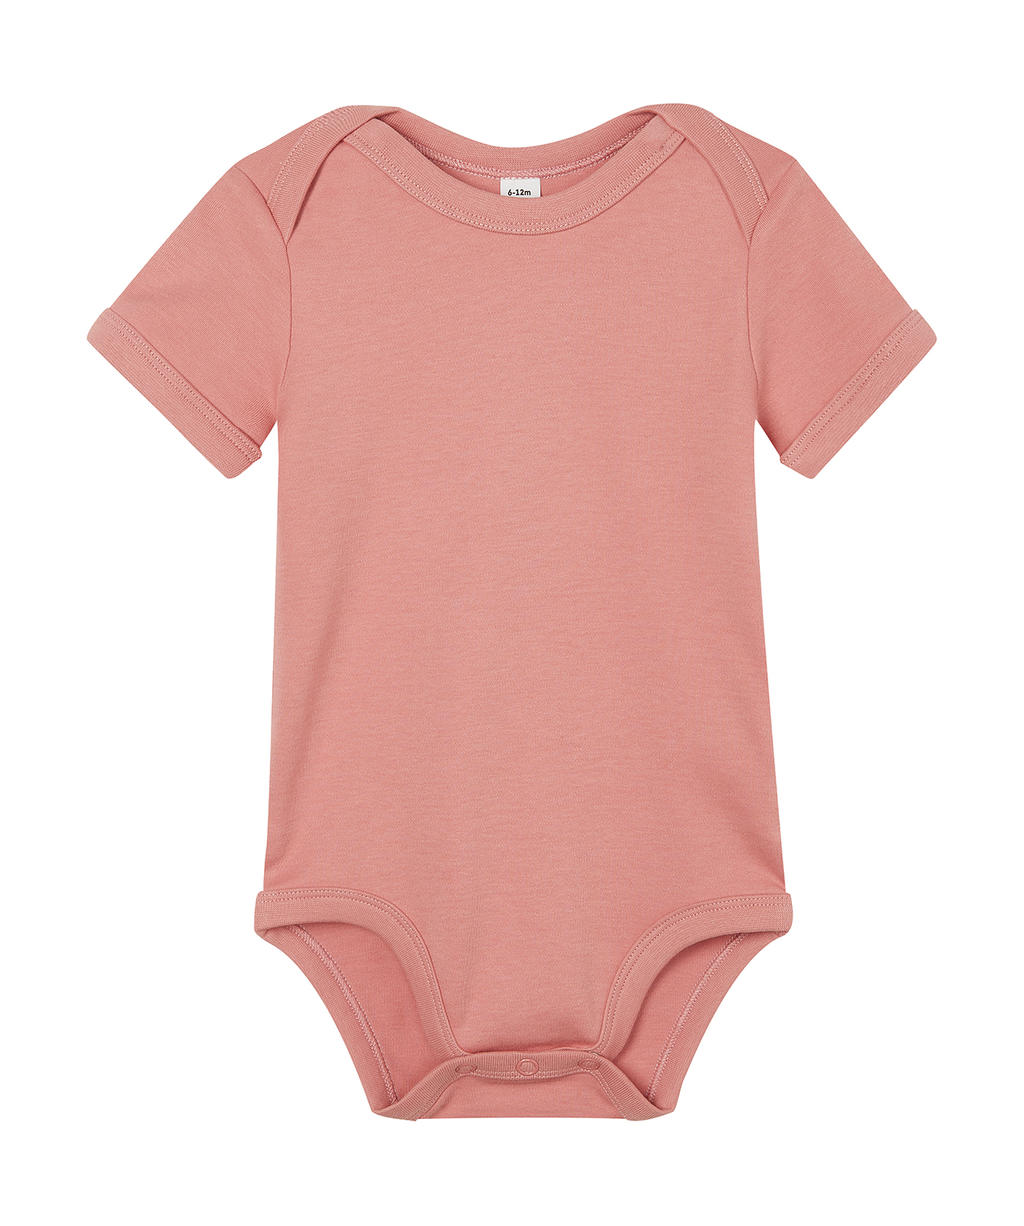  Baby Bodysuit in Farbe Dusty Rose